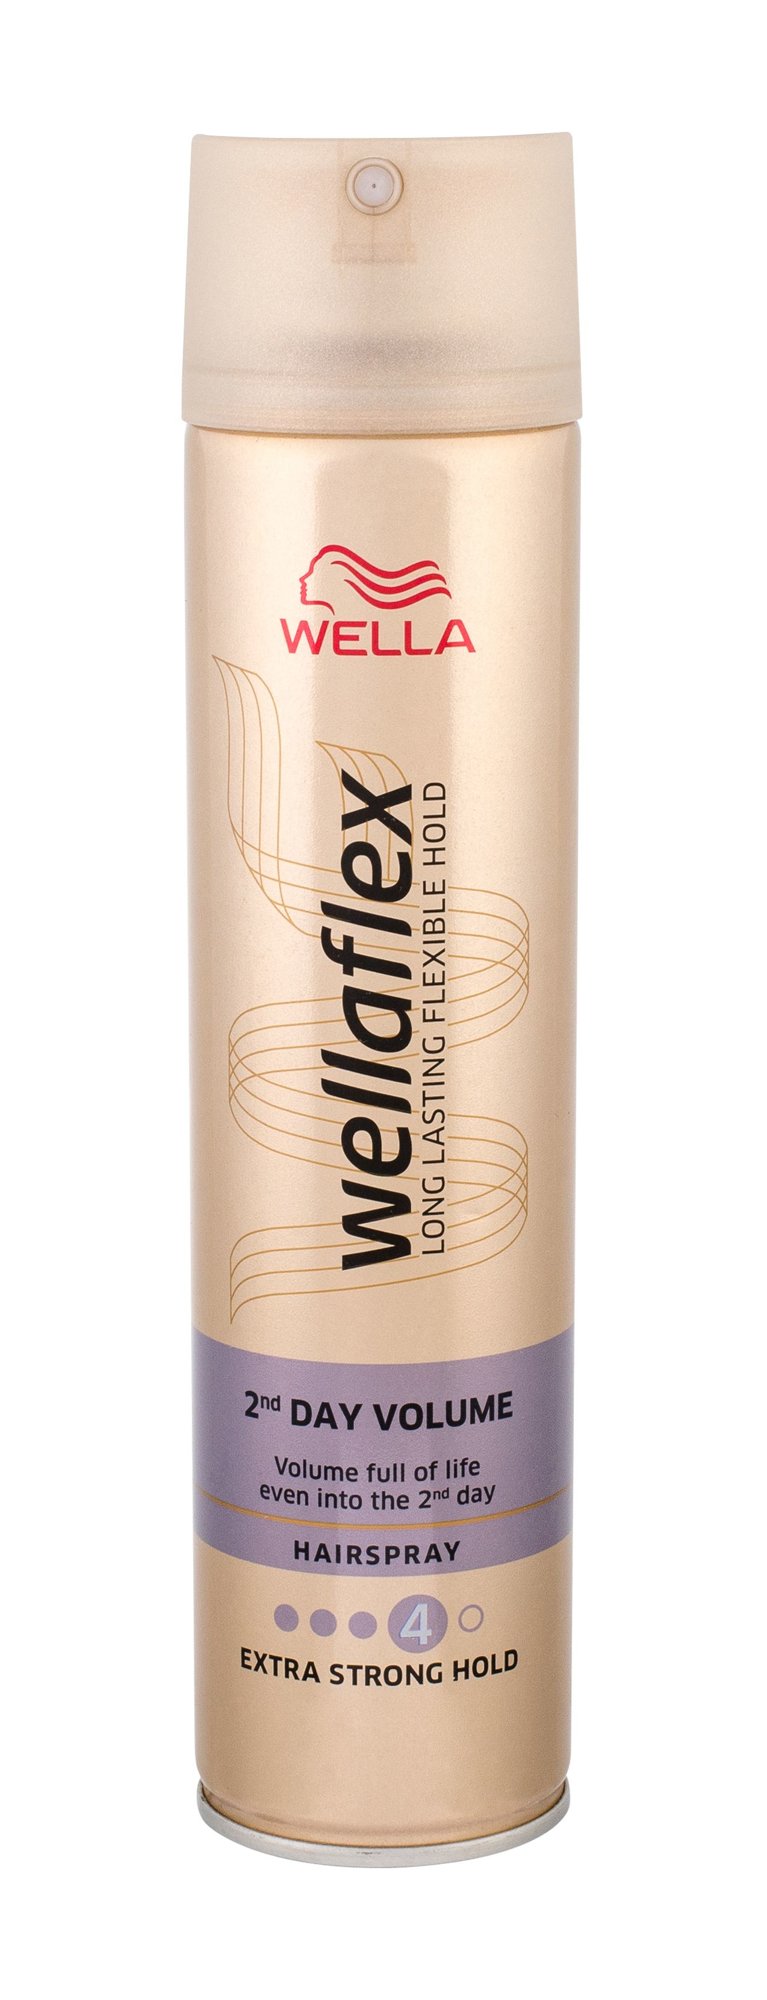 Wella Wellaflex 2nd Day Volume plaukų lakas